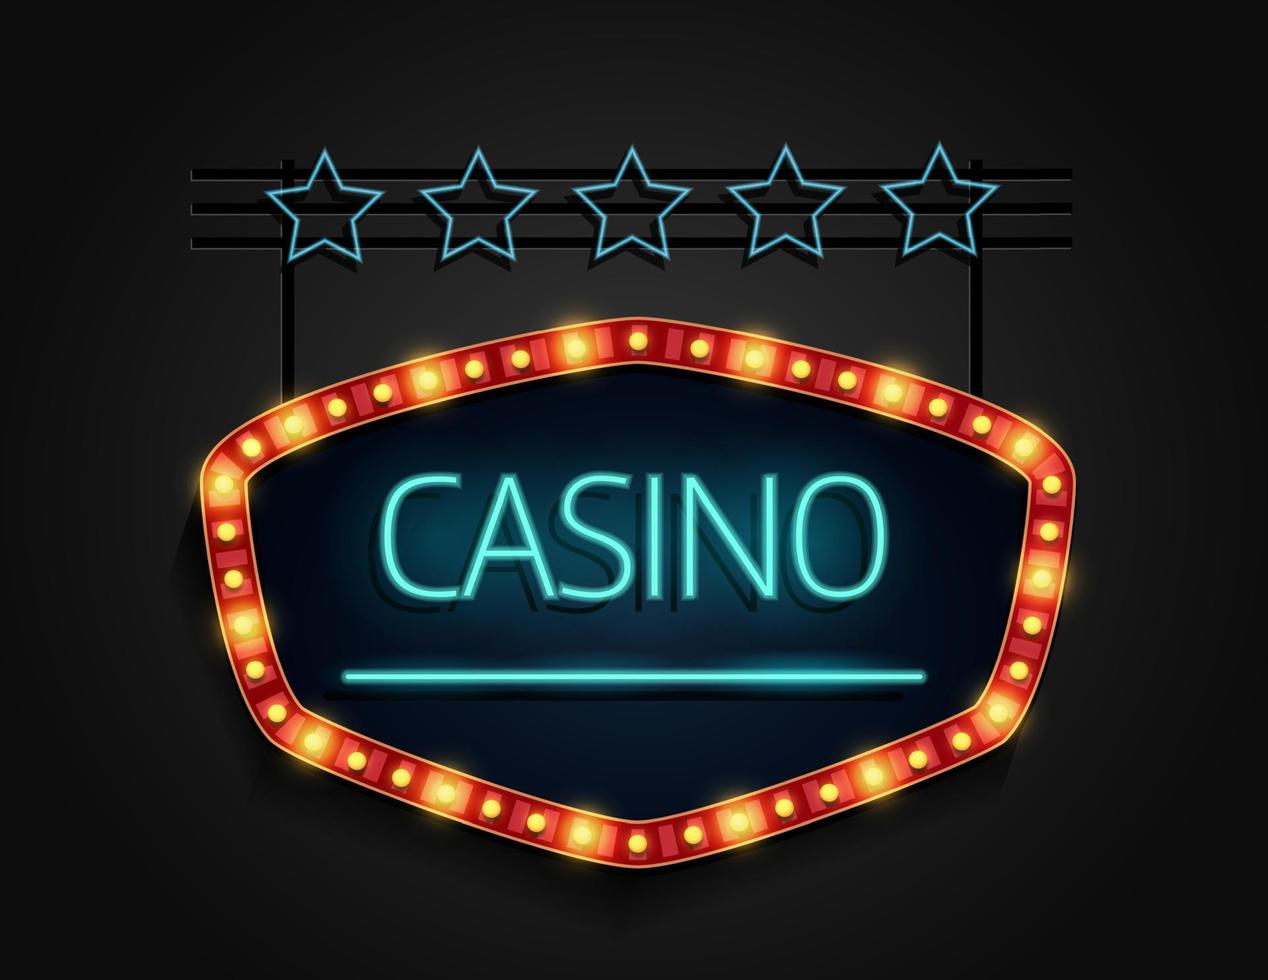 Casino-Schild im Retro-Stil mit hellem Rahmen vektor